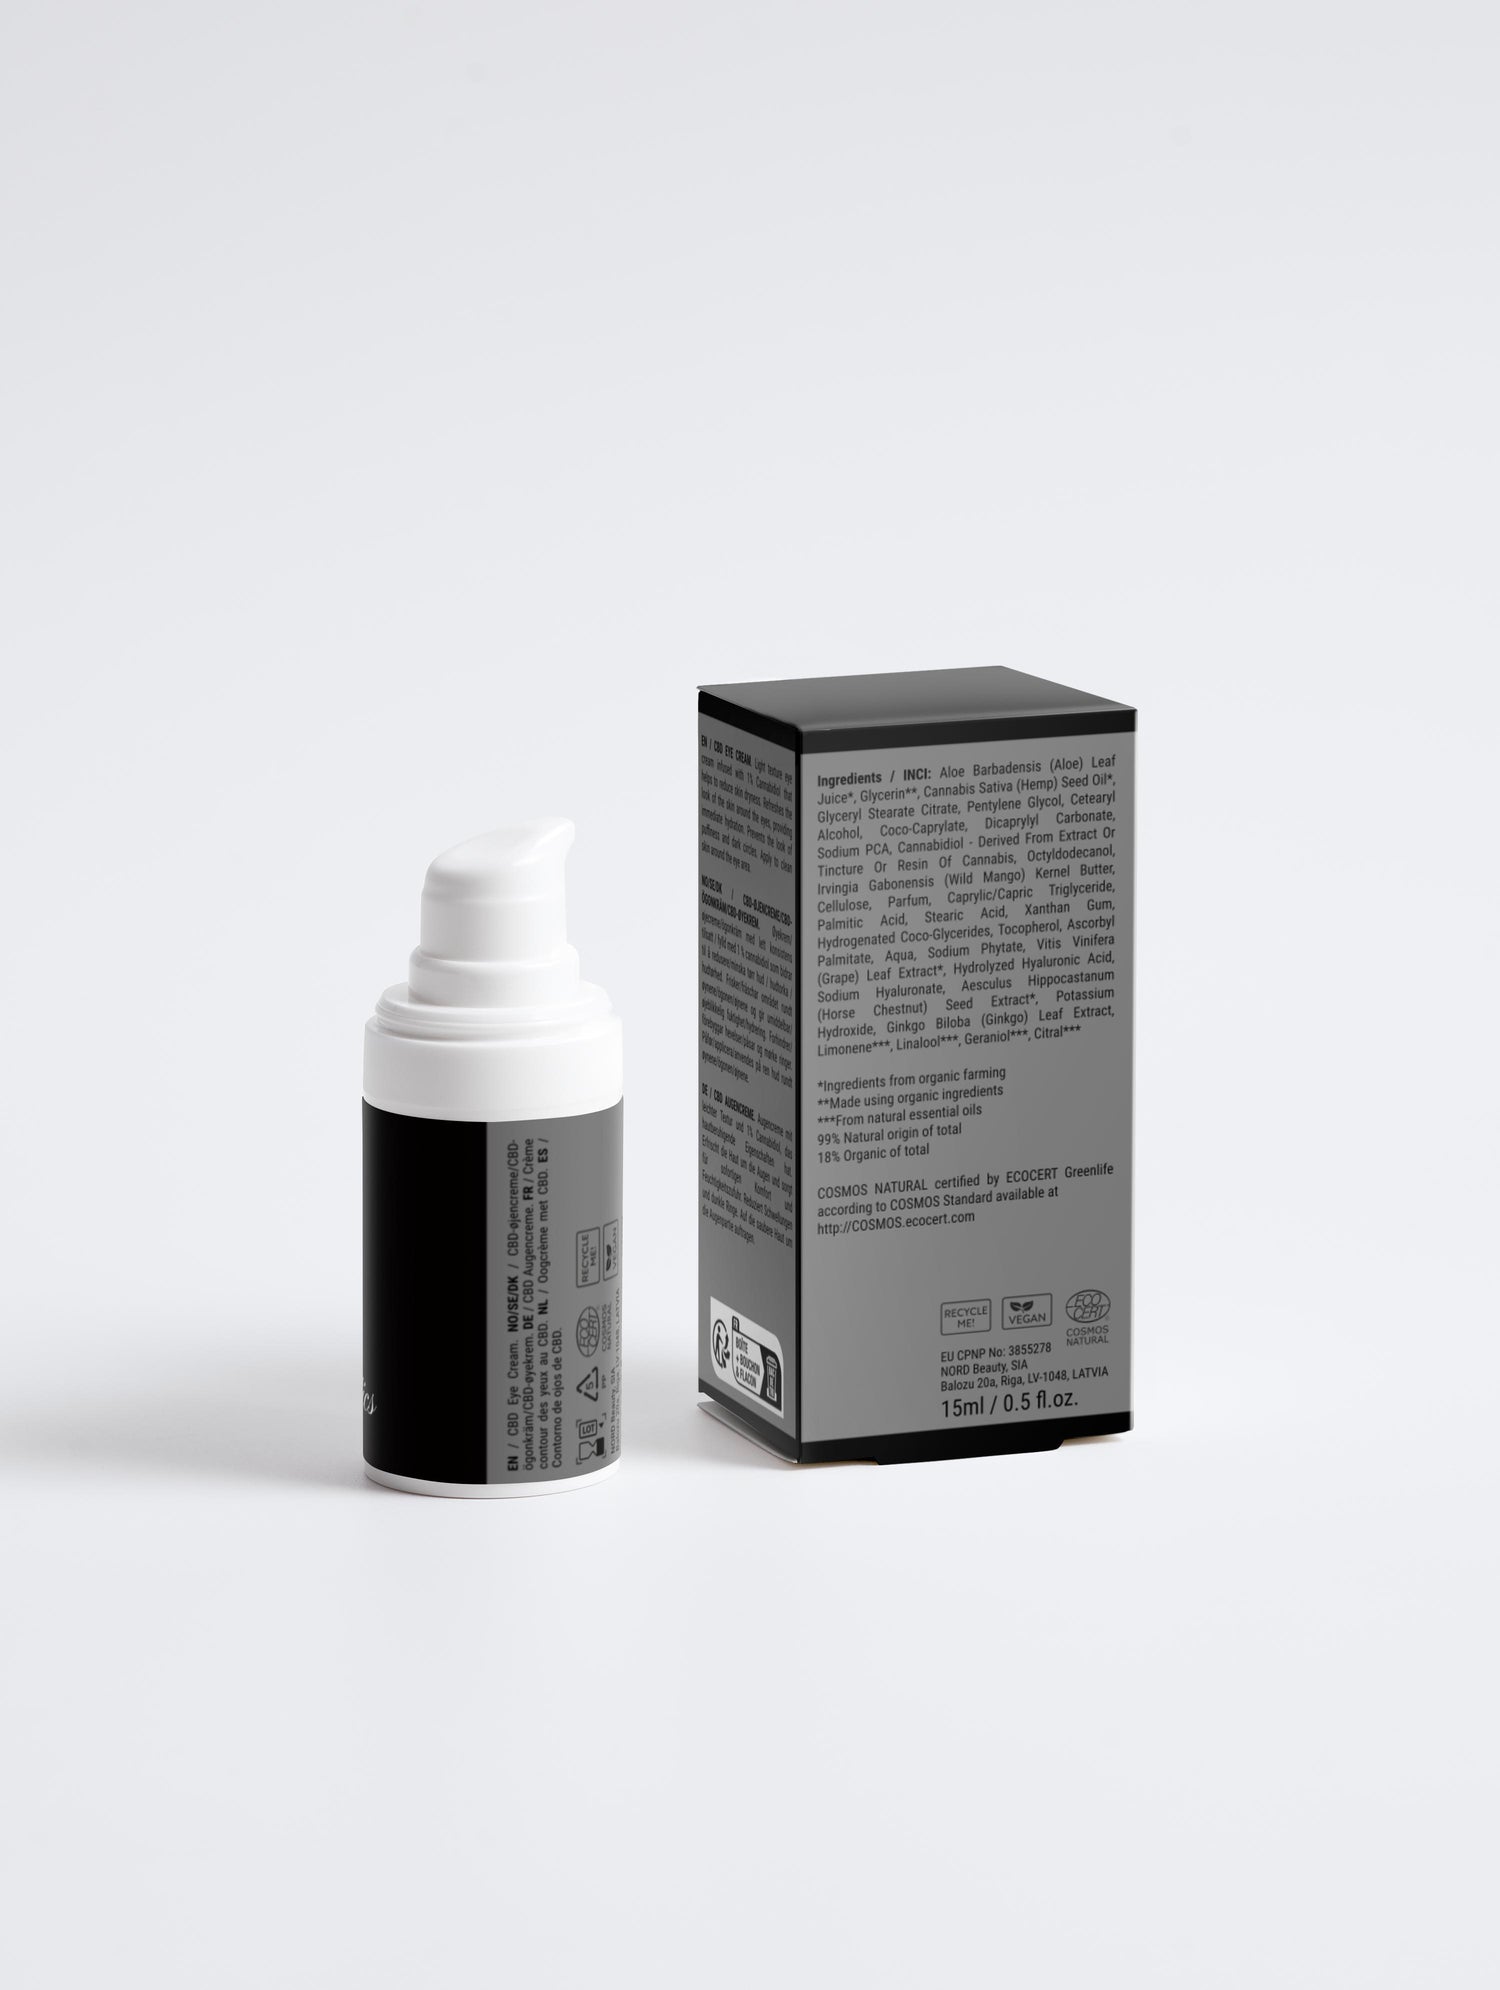 Lunox Cosmetics' Soothe & Refresh CBD-Infused Eye Cream